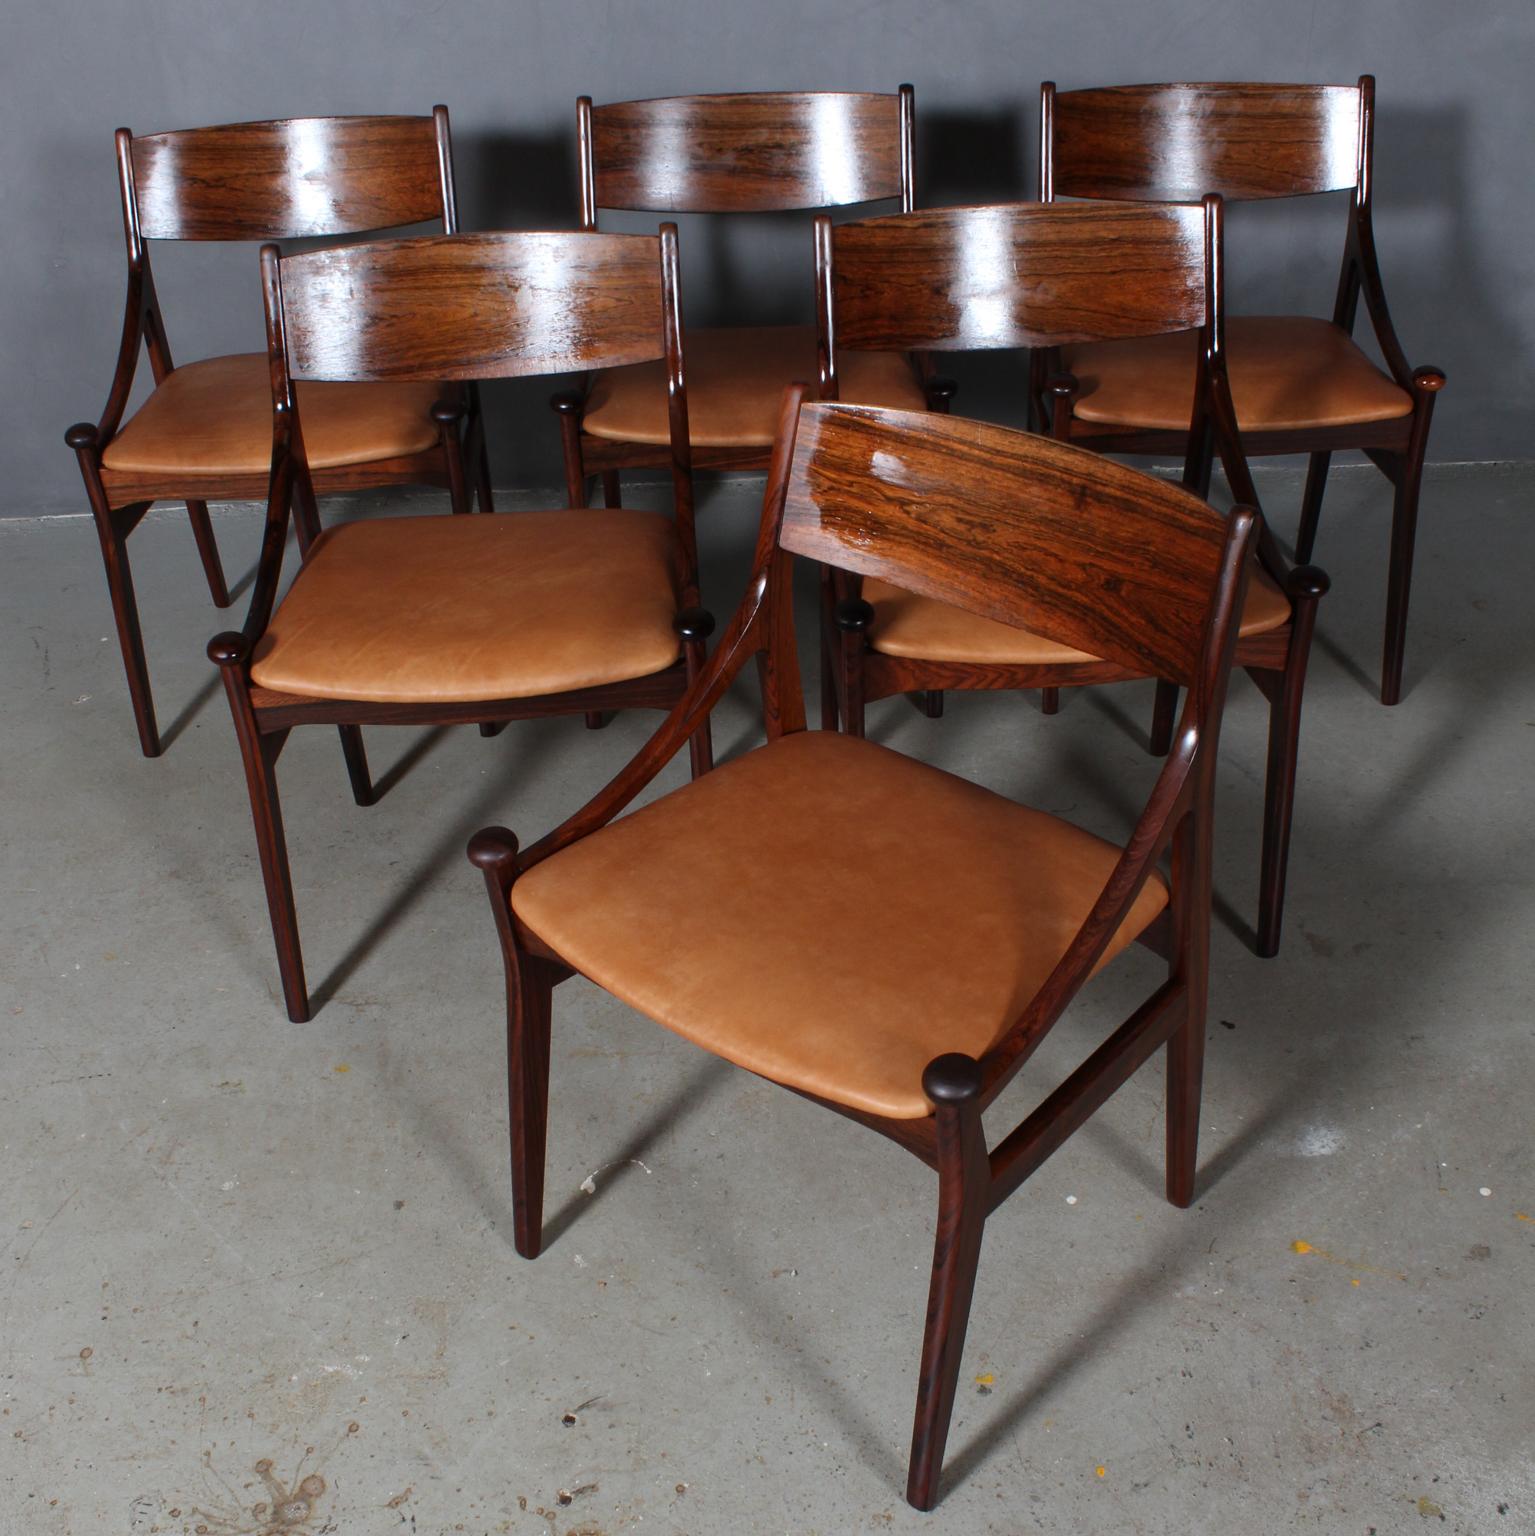 Vestervig Eriksen set of six dining chairs in partly solid rosewood. 

Seats new upholstered with tan vintage aniline leather.

Made by Brdr. Tromborg’s Eftf., Møbelfabrik Vestervig Eriksen Aarhus.